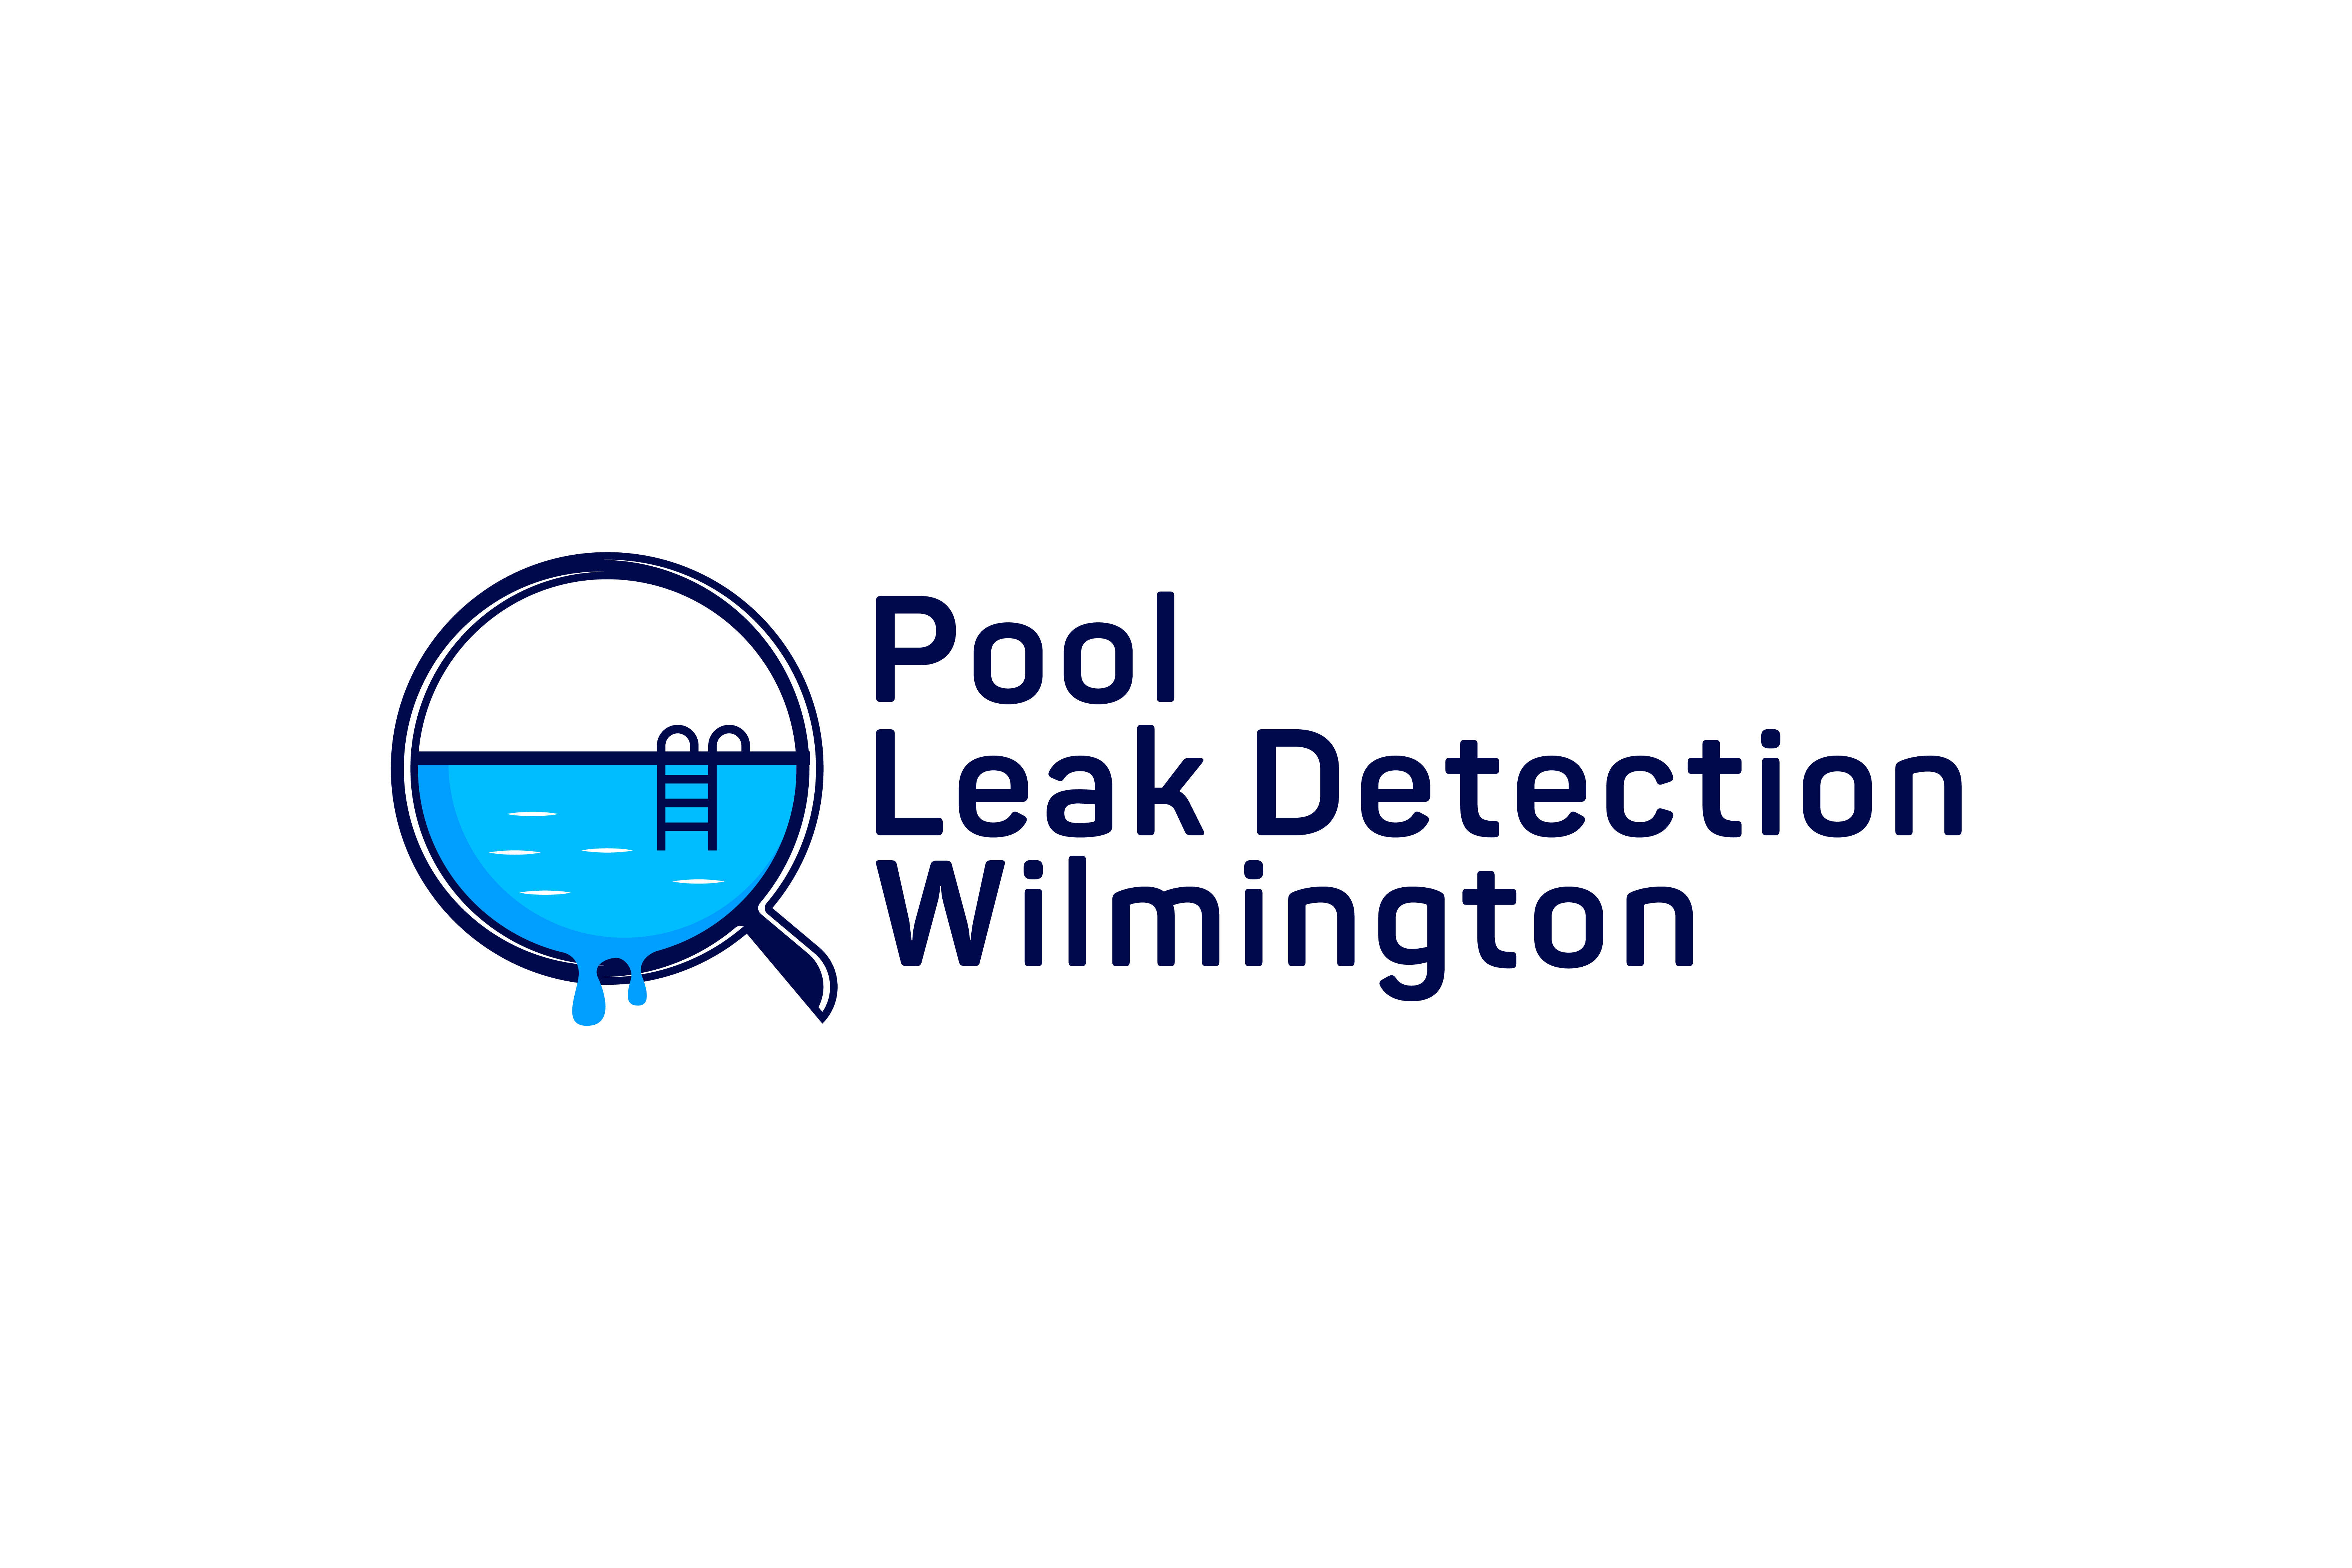 Pool Leak Detection Wilmington review